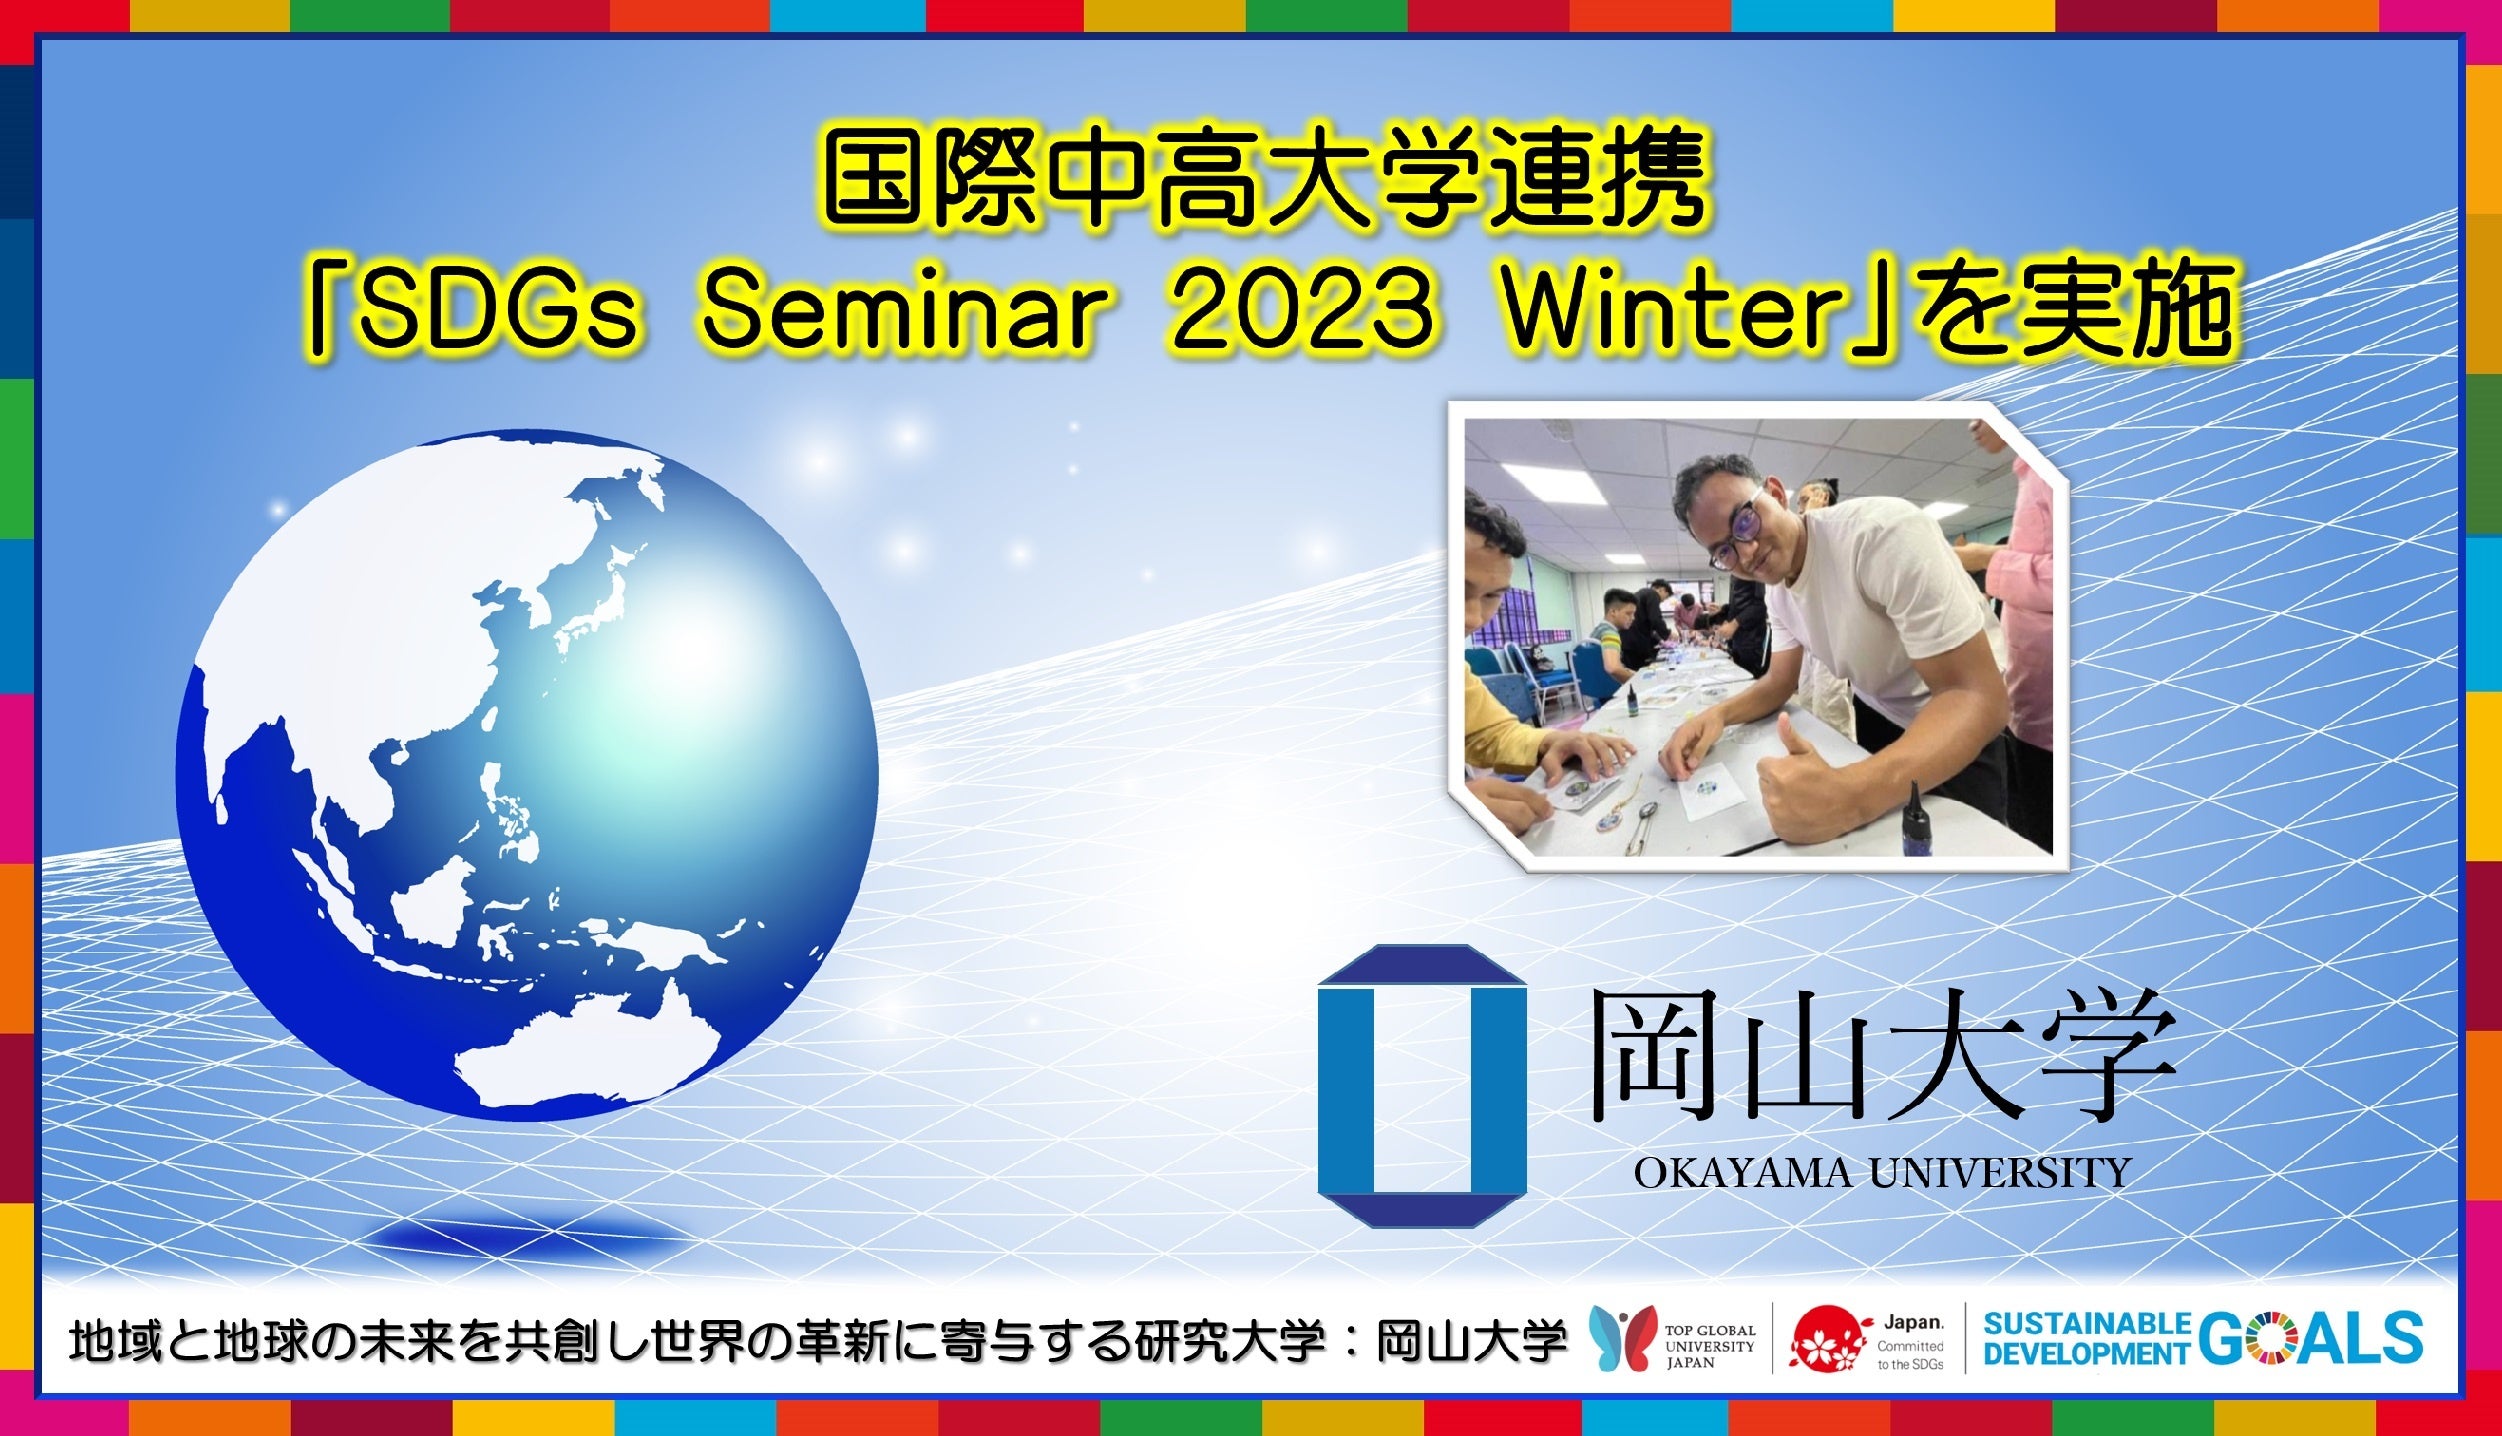 yRwzےwAguSDGs Seminar 2023 Winterv{